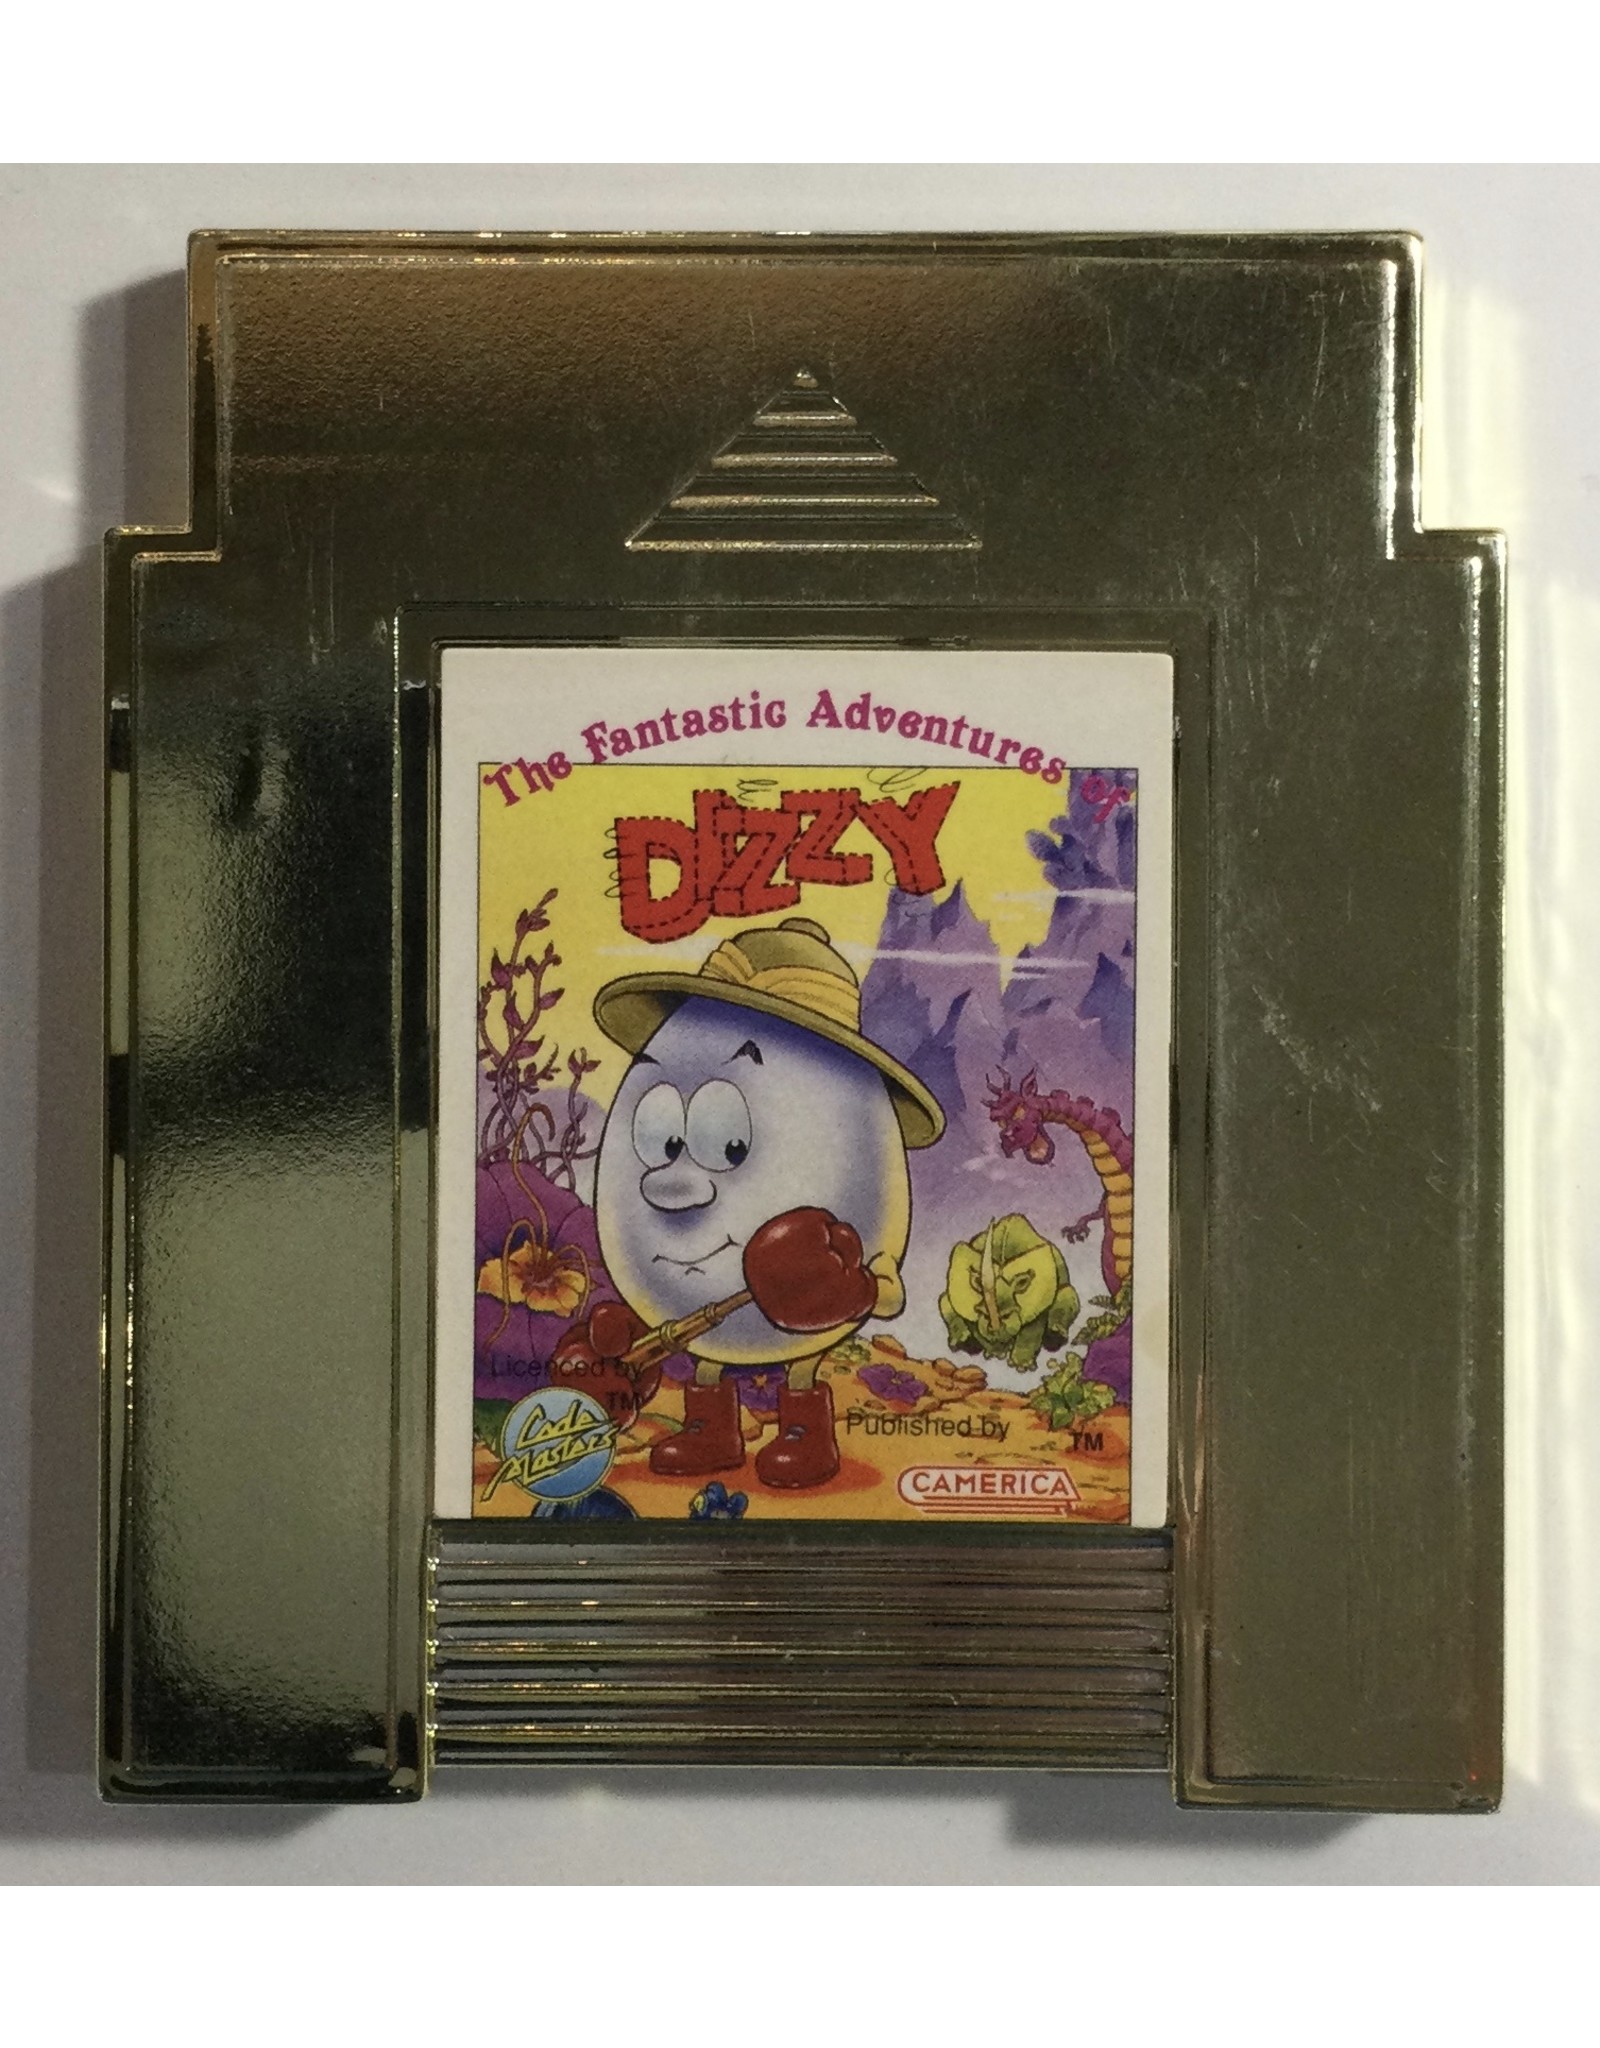 Camerica The Fantastic Adventures of Dizzy for Nintendo Entertainment system (NES) - CIB